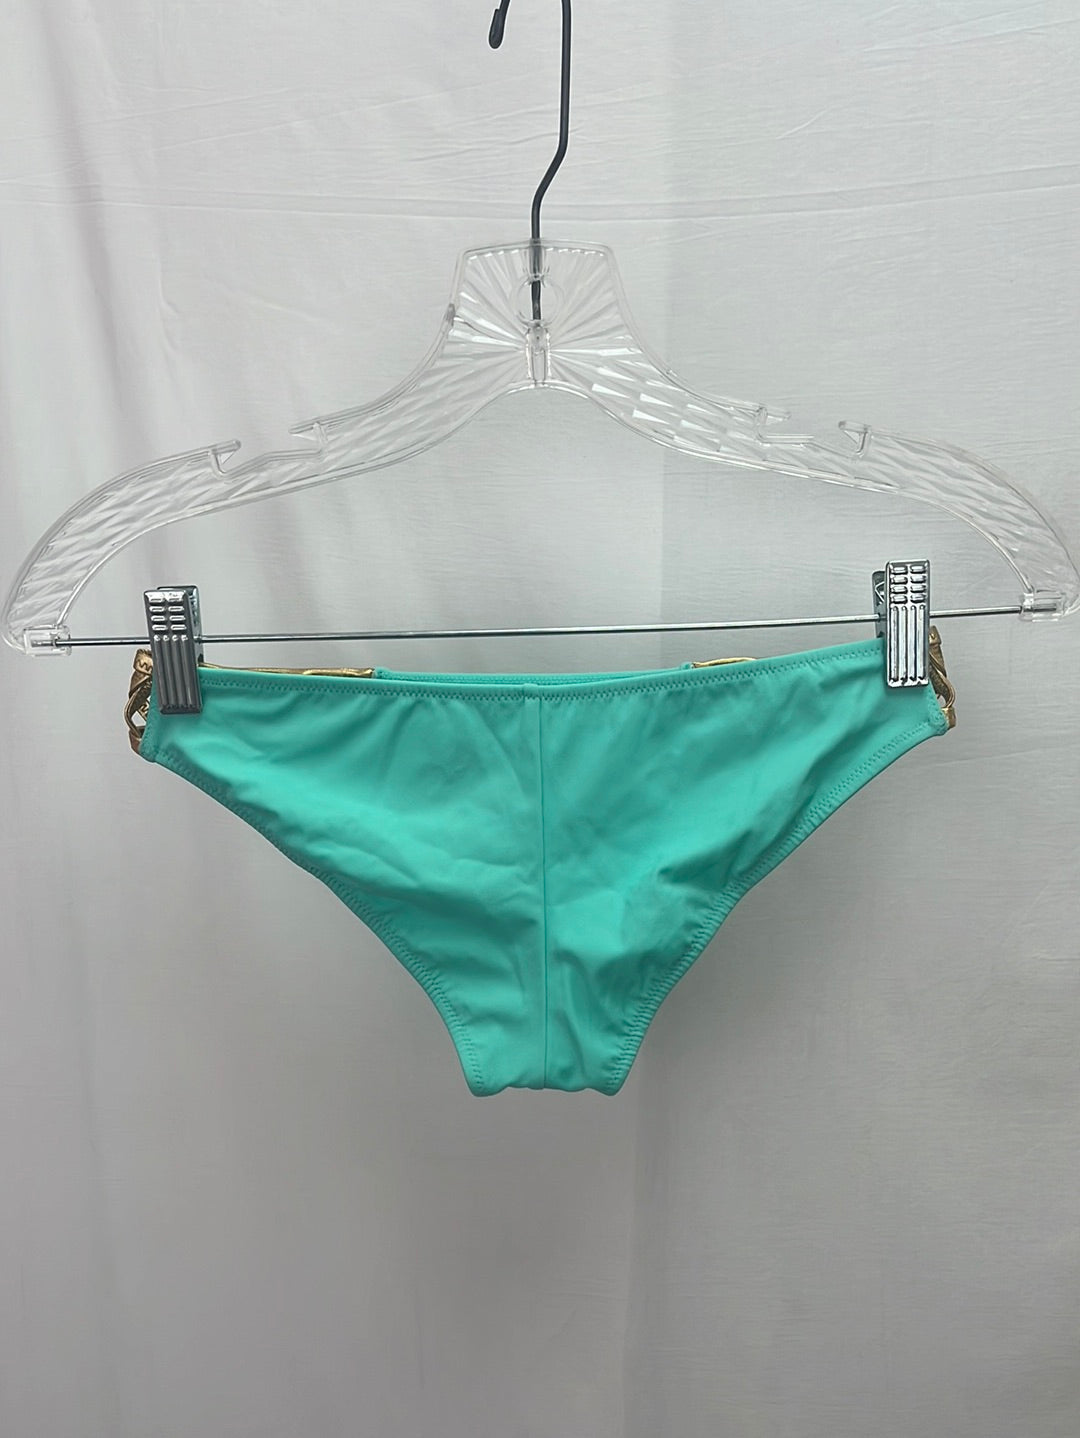 NIP -- VICTORIA'S SECRET Turquoise The Cheeky Hipkini Bikini Bottom -- XS